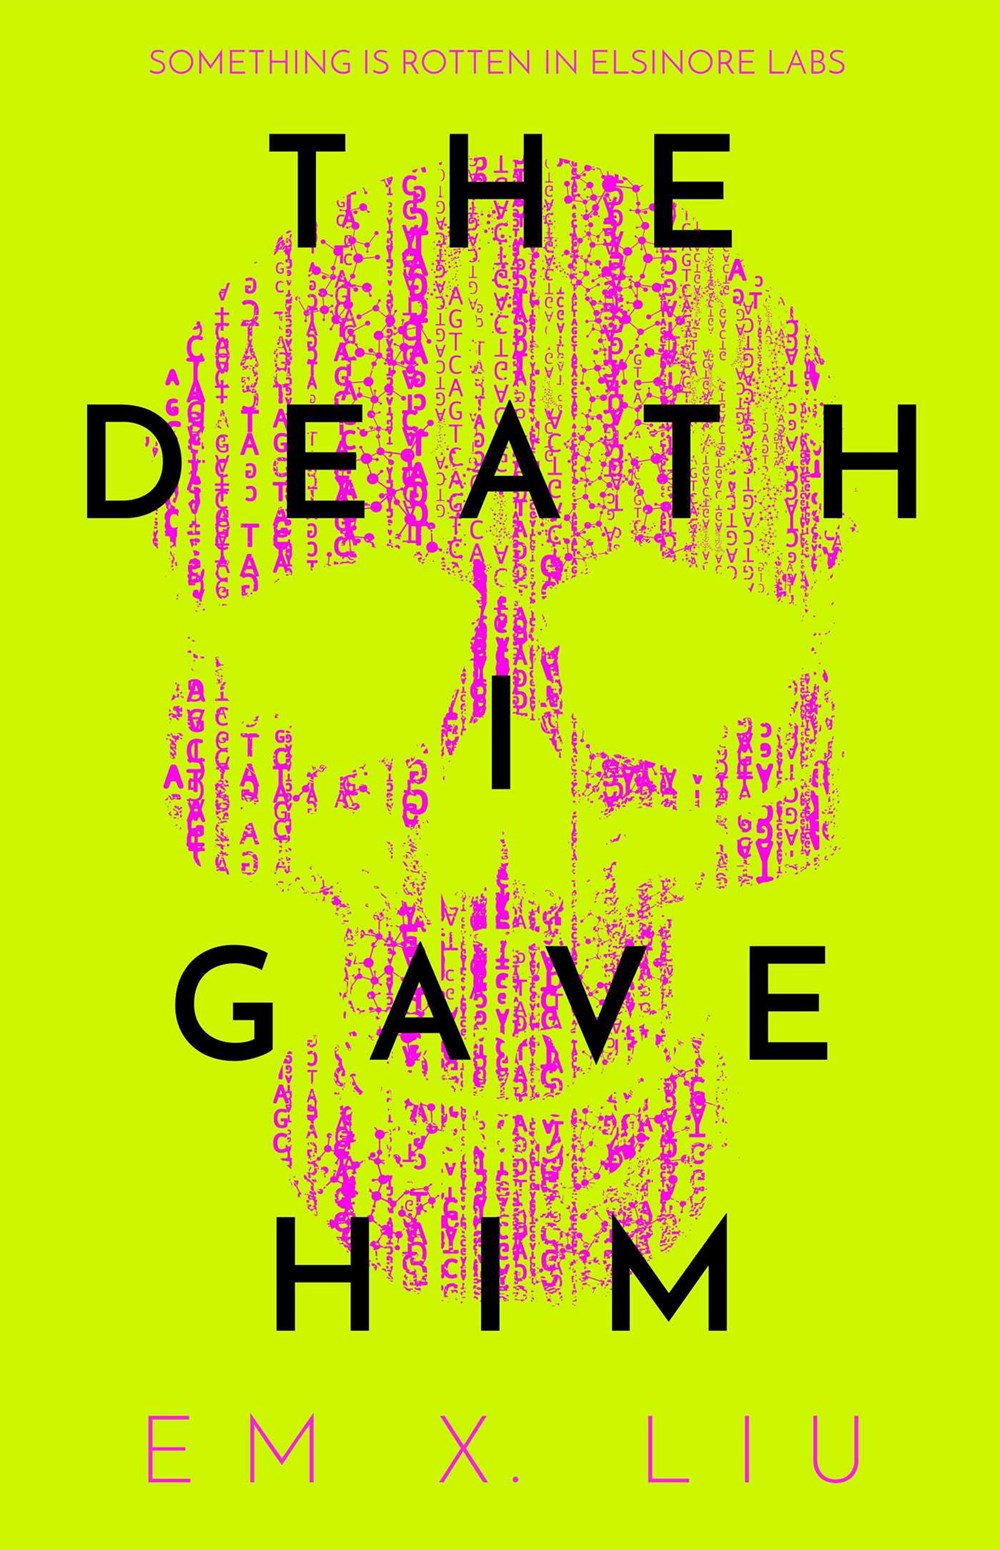 The Death I Gave Him by Em X. Liu (Hardcover)